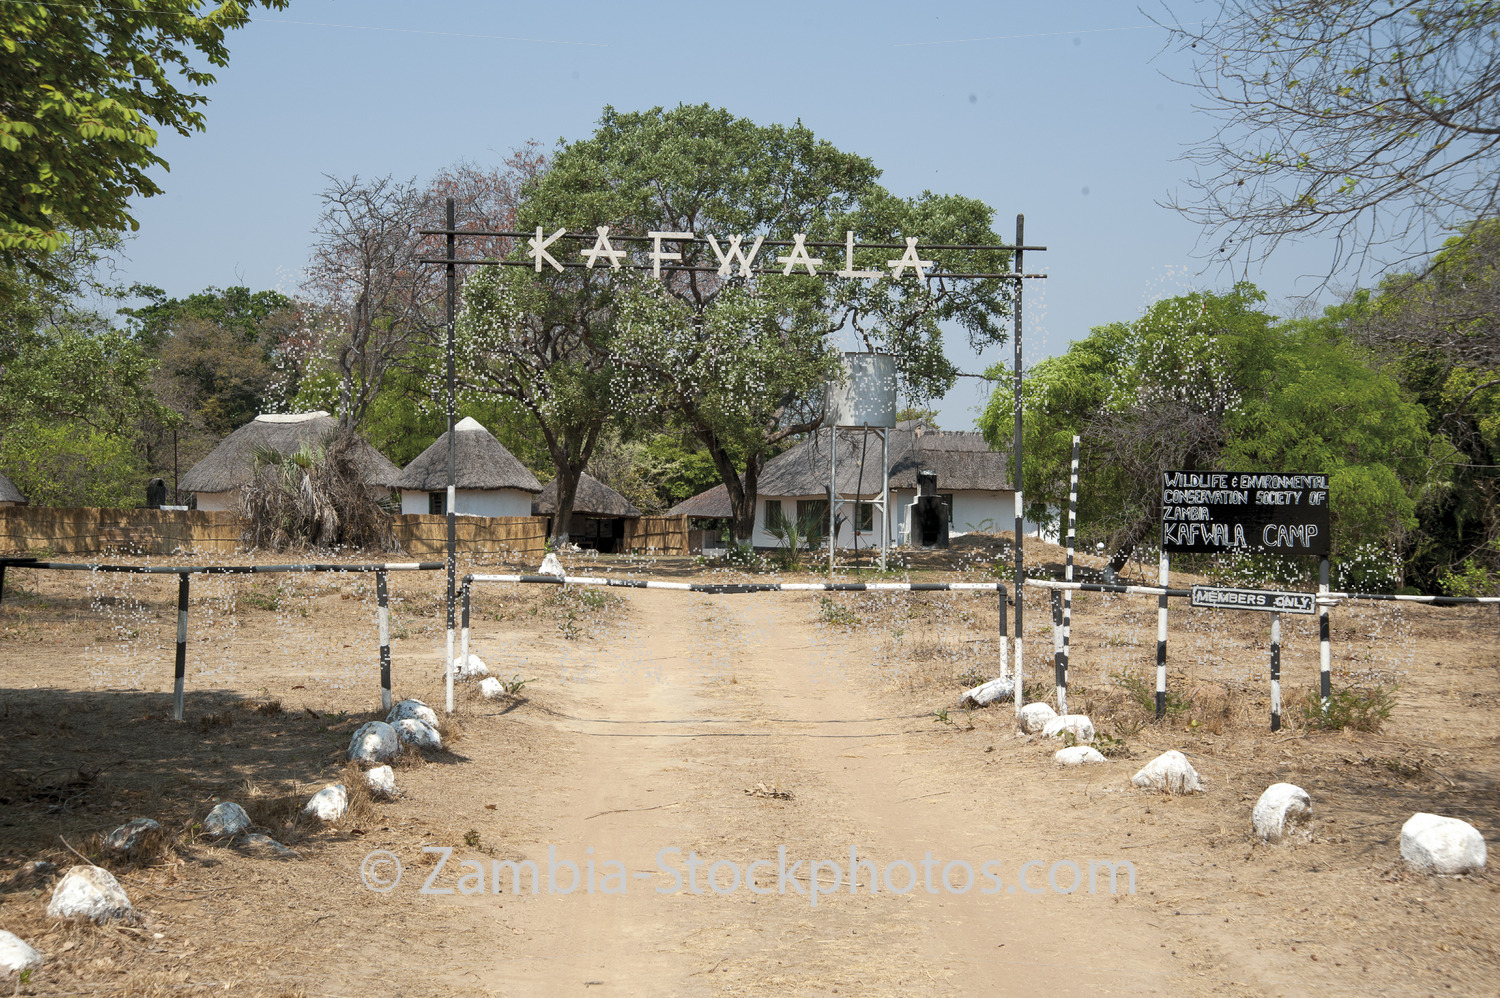 Kafwala gate.jpg - Zamstockphotos.com